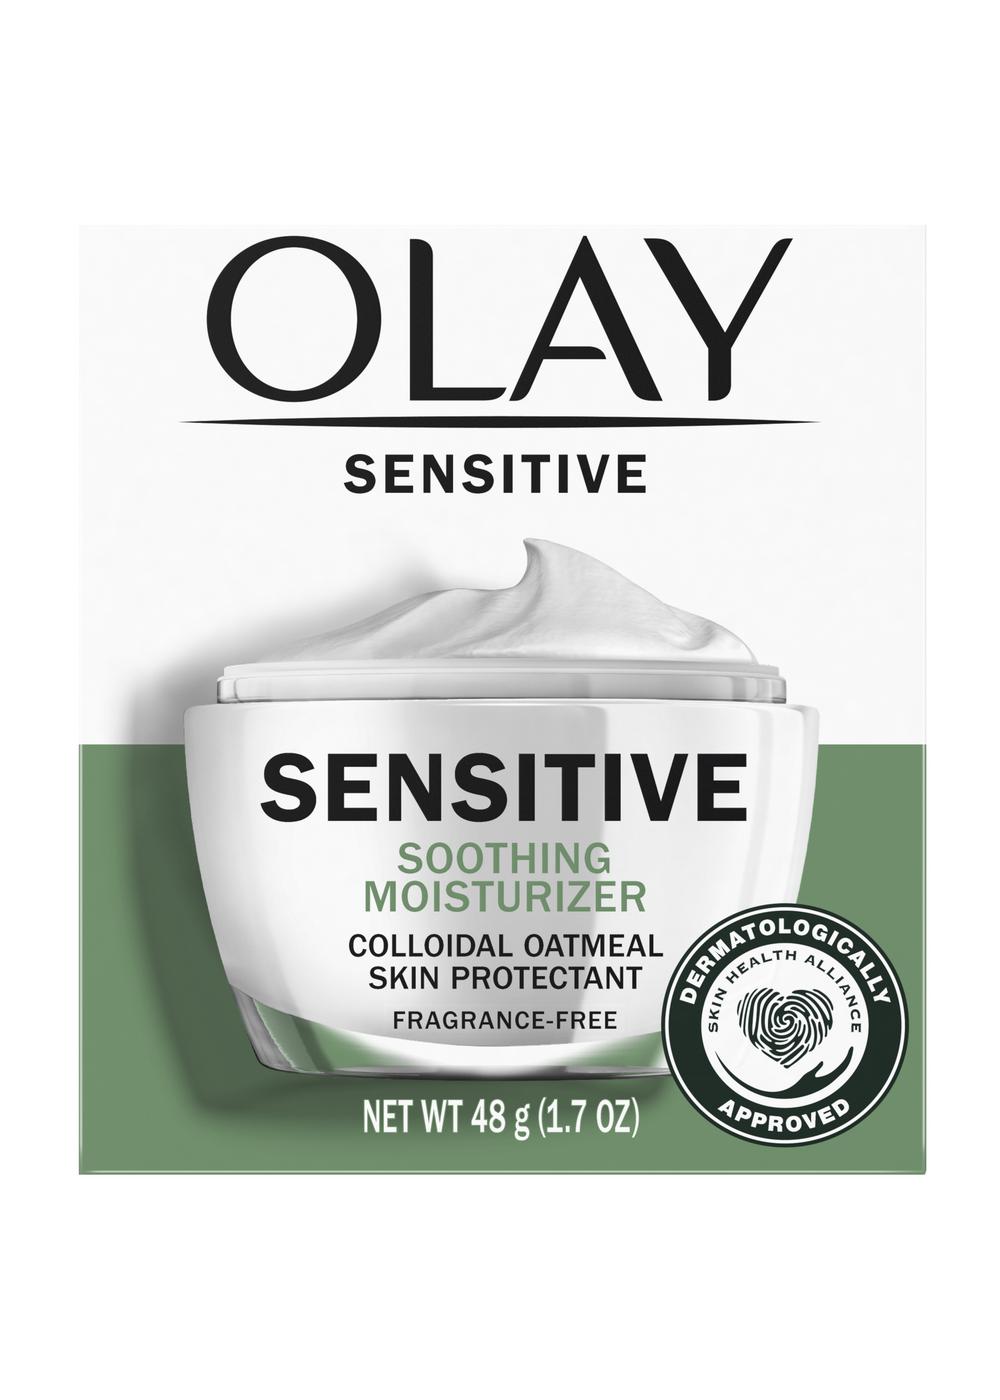 Olay Sensitive Soothing Moisturizer; image 1 of 3